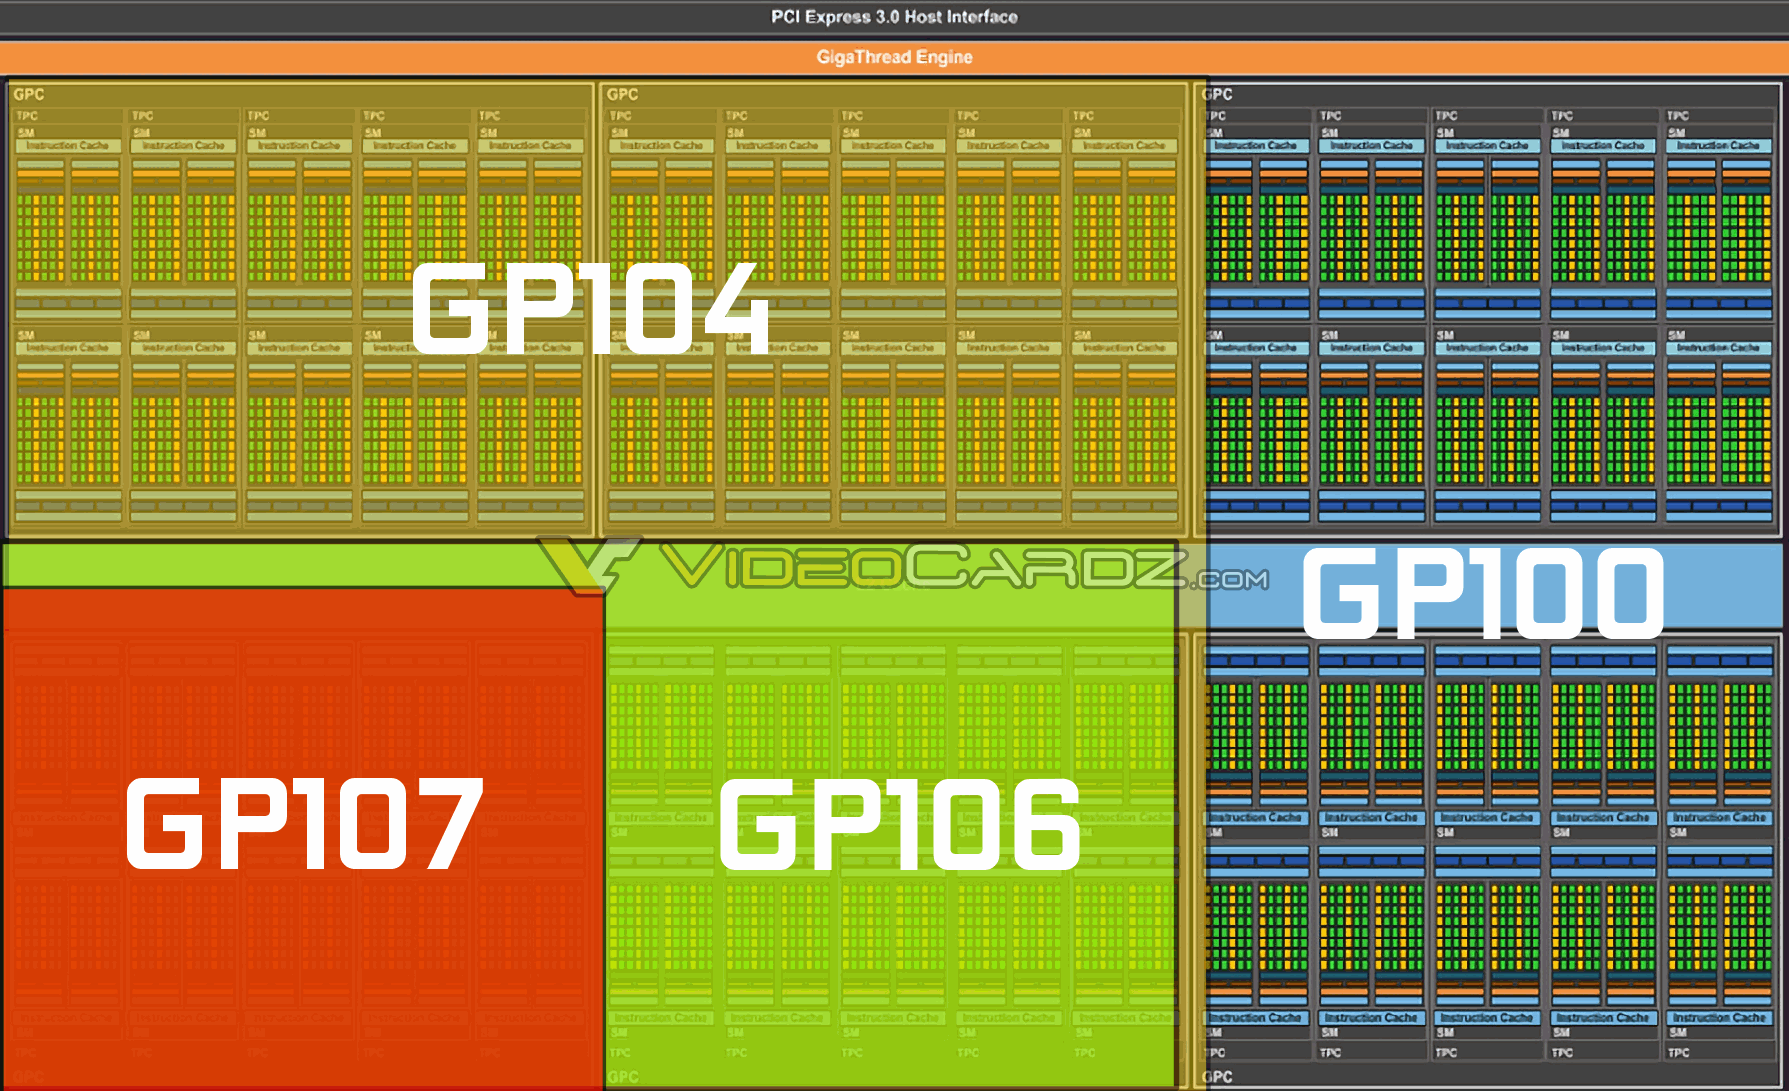 NVIDIA GeForce GTX TITAN based on 